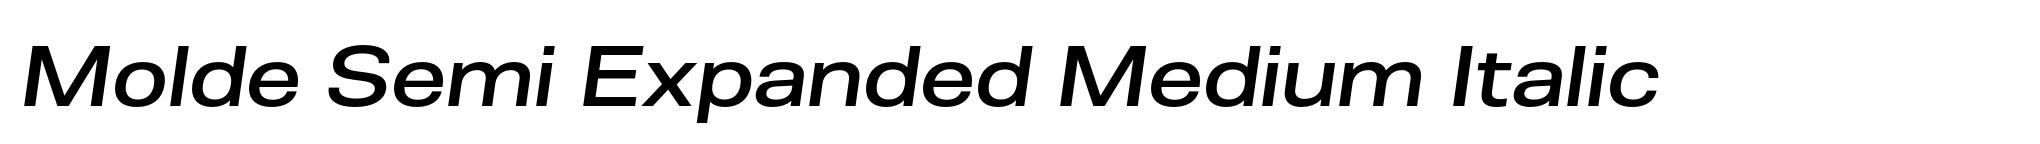 Molde Semi Expanded Medium Italic image